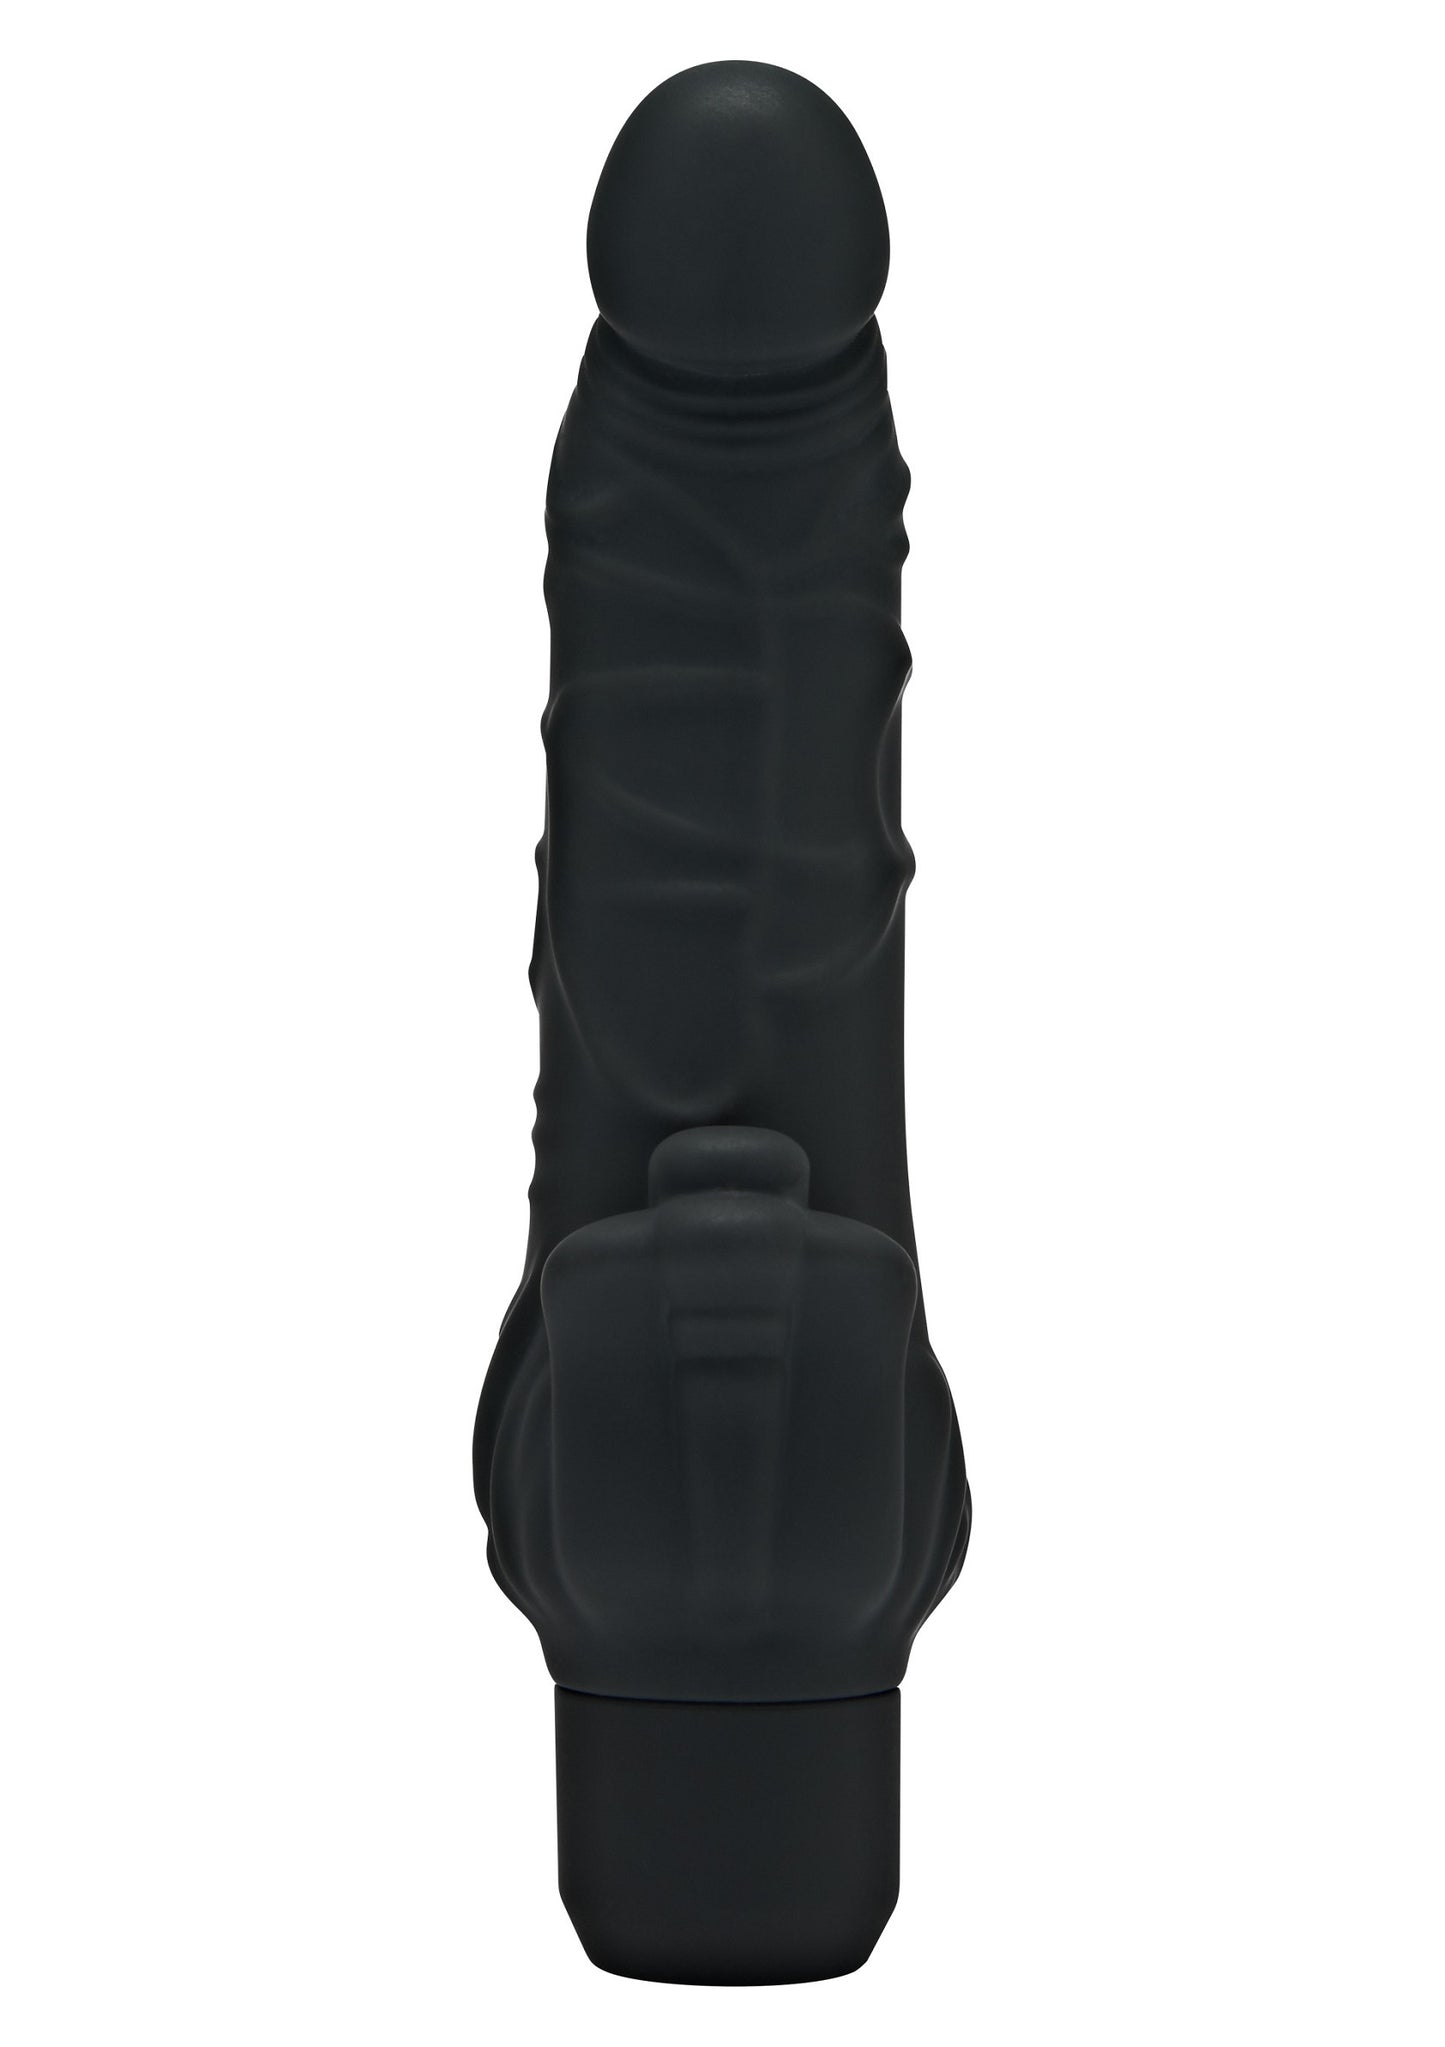 ToyJoy Get Real Classic Stim Vibrator BLACK - 0